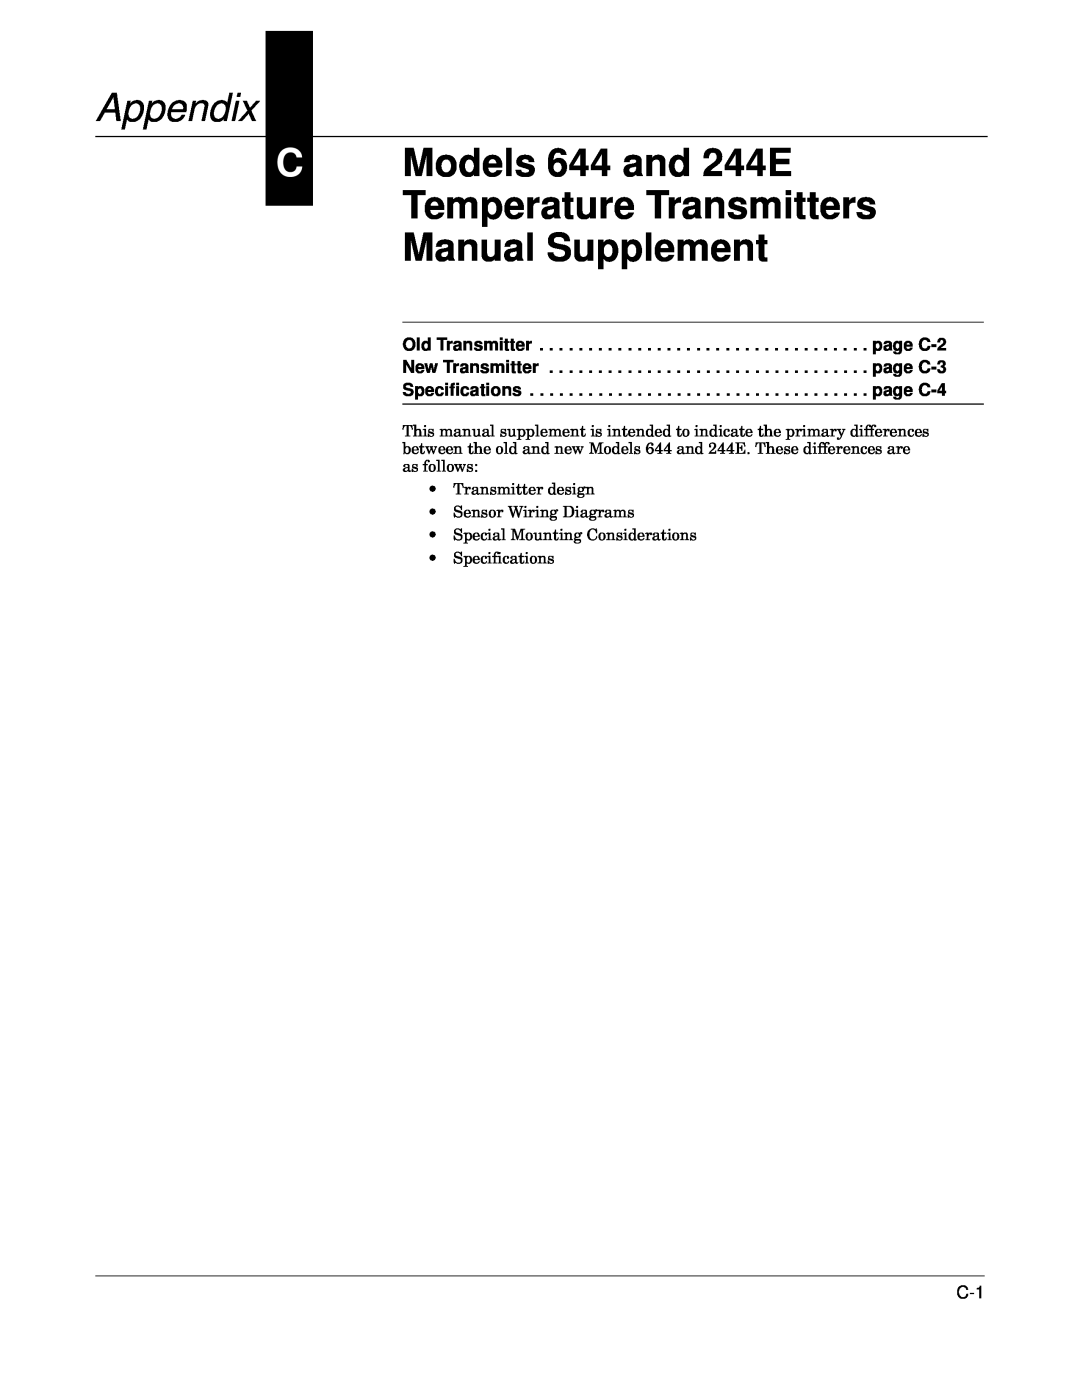 Fisher 244EH, 244ER manual C Models 644 and 244E Temperature Transmitters Manual Supplement, Appendix 